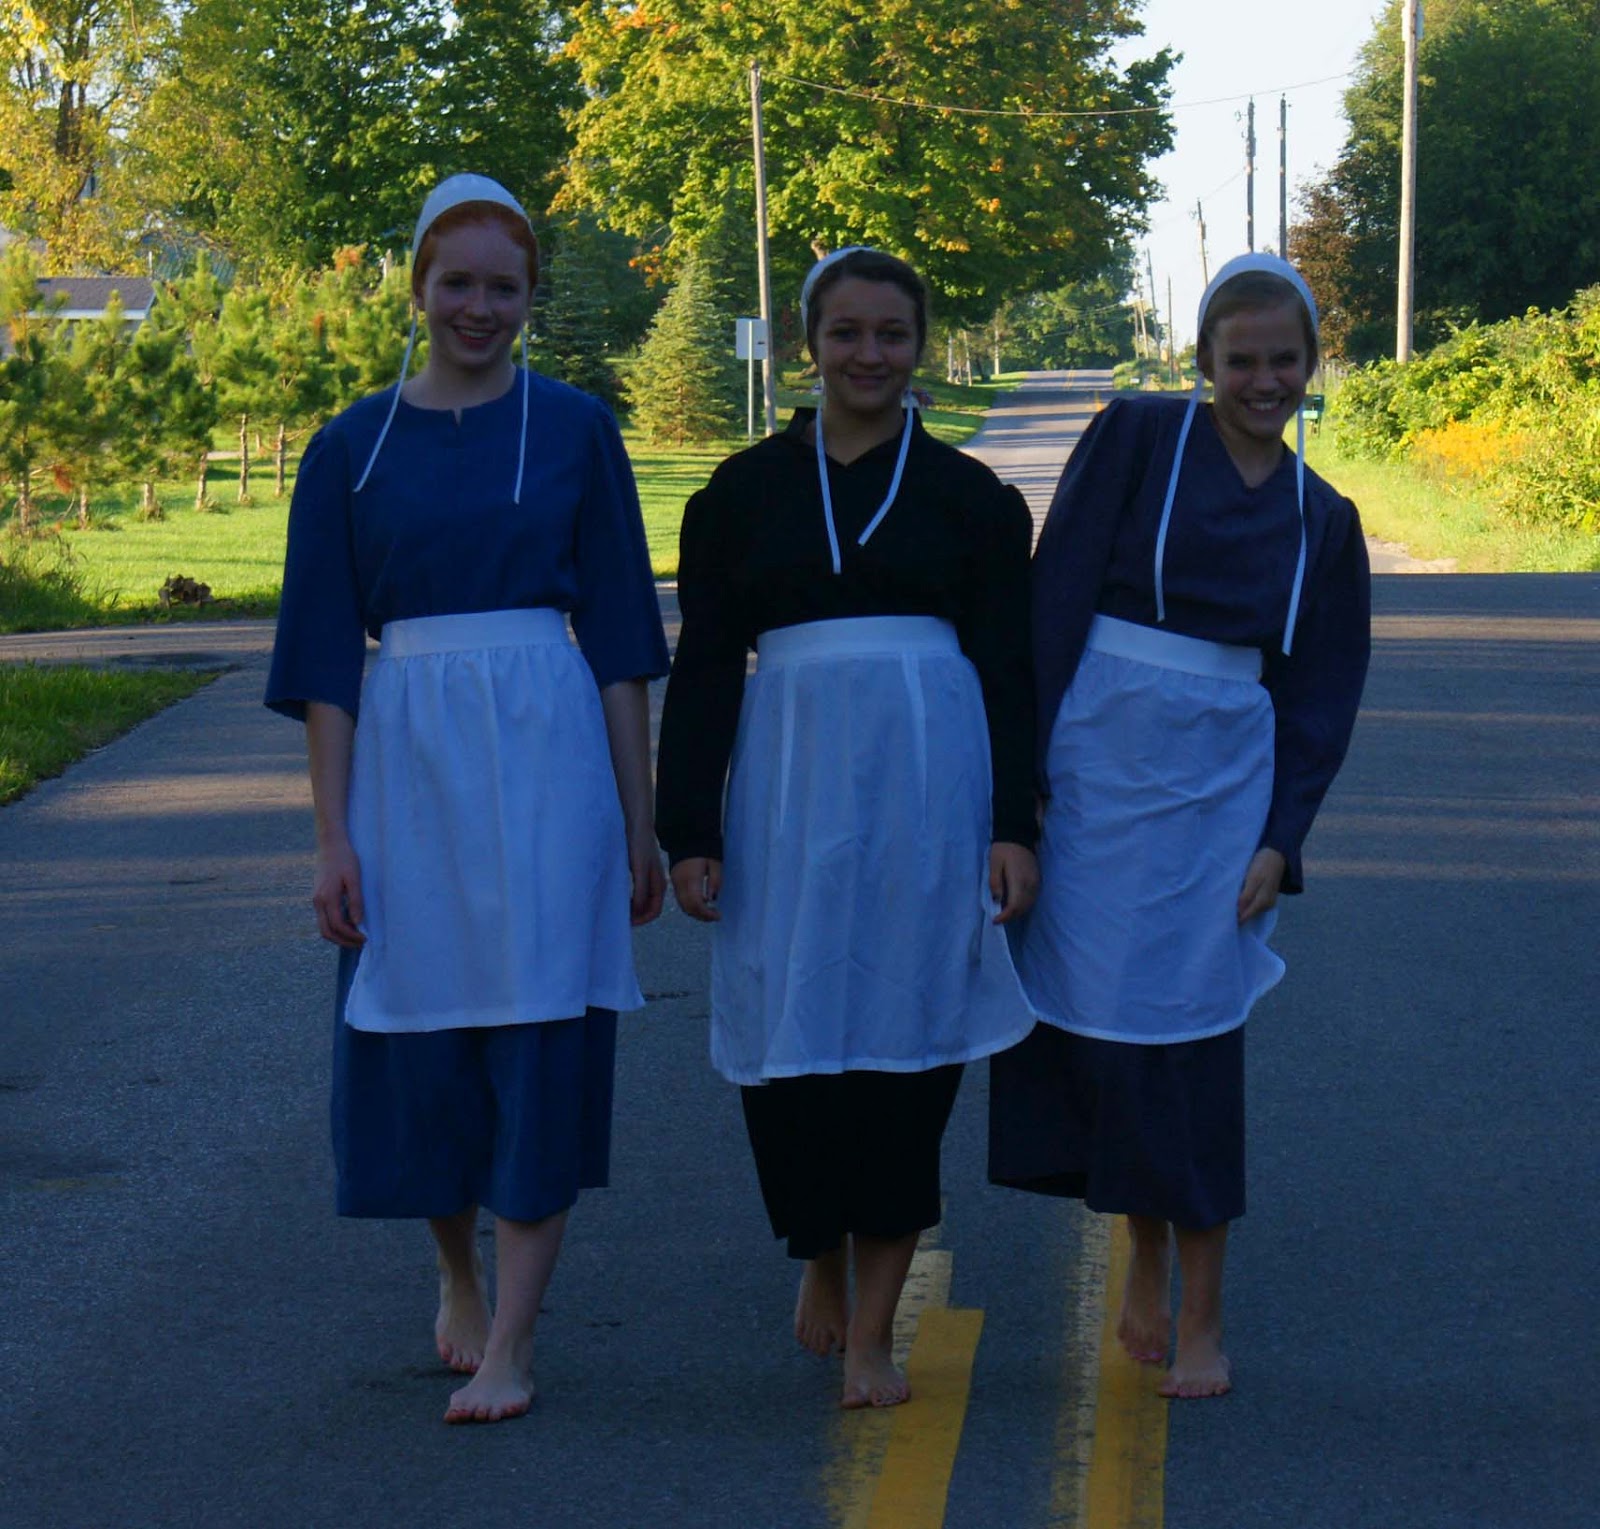 Dressing Amish.